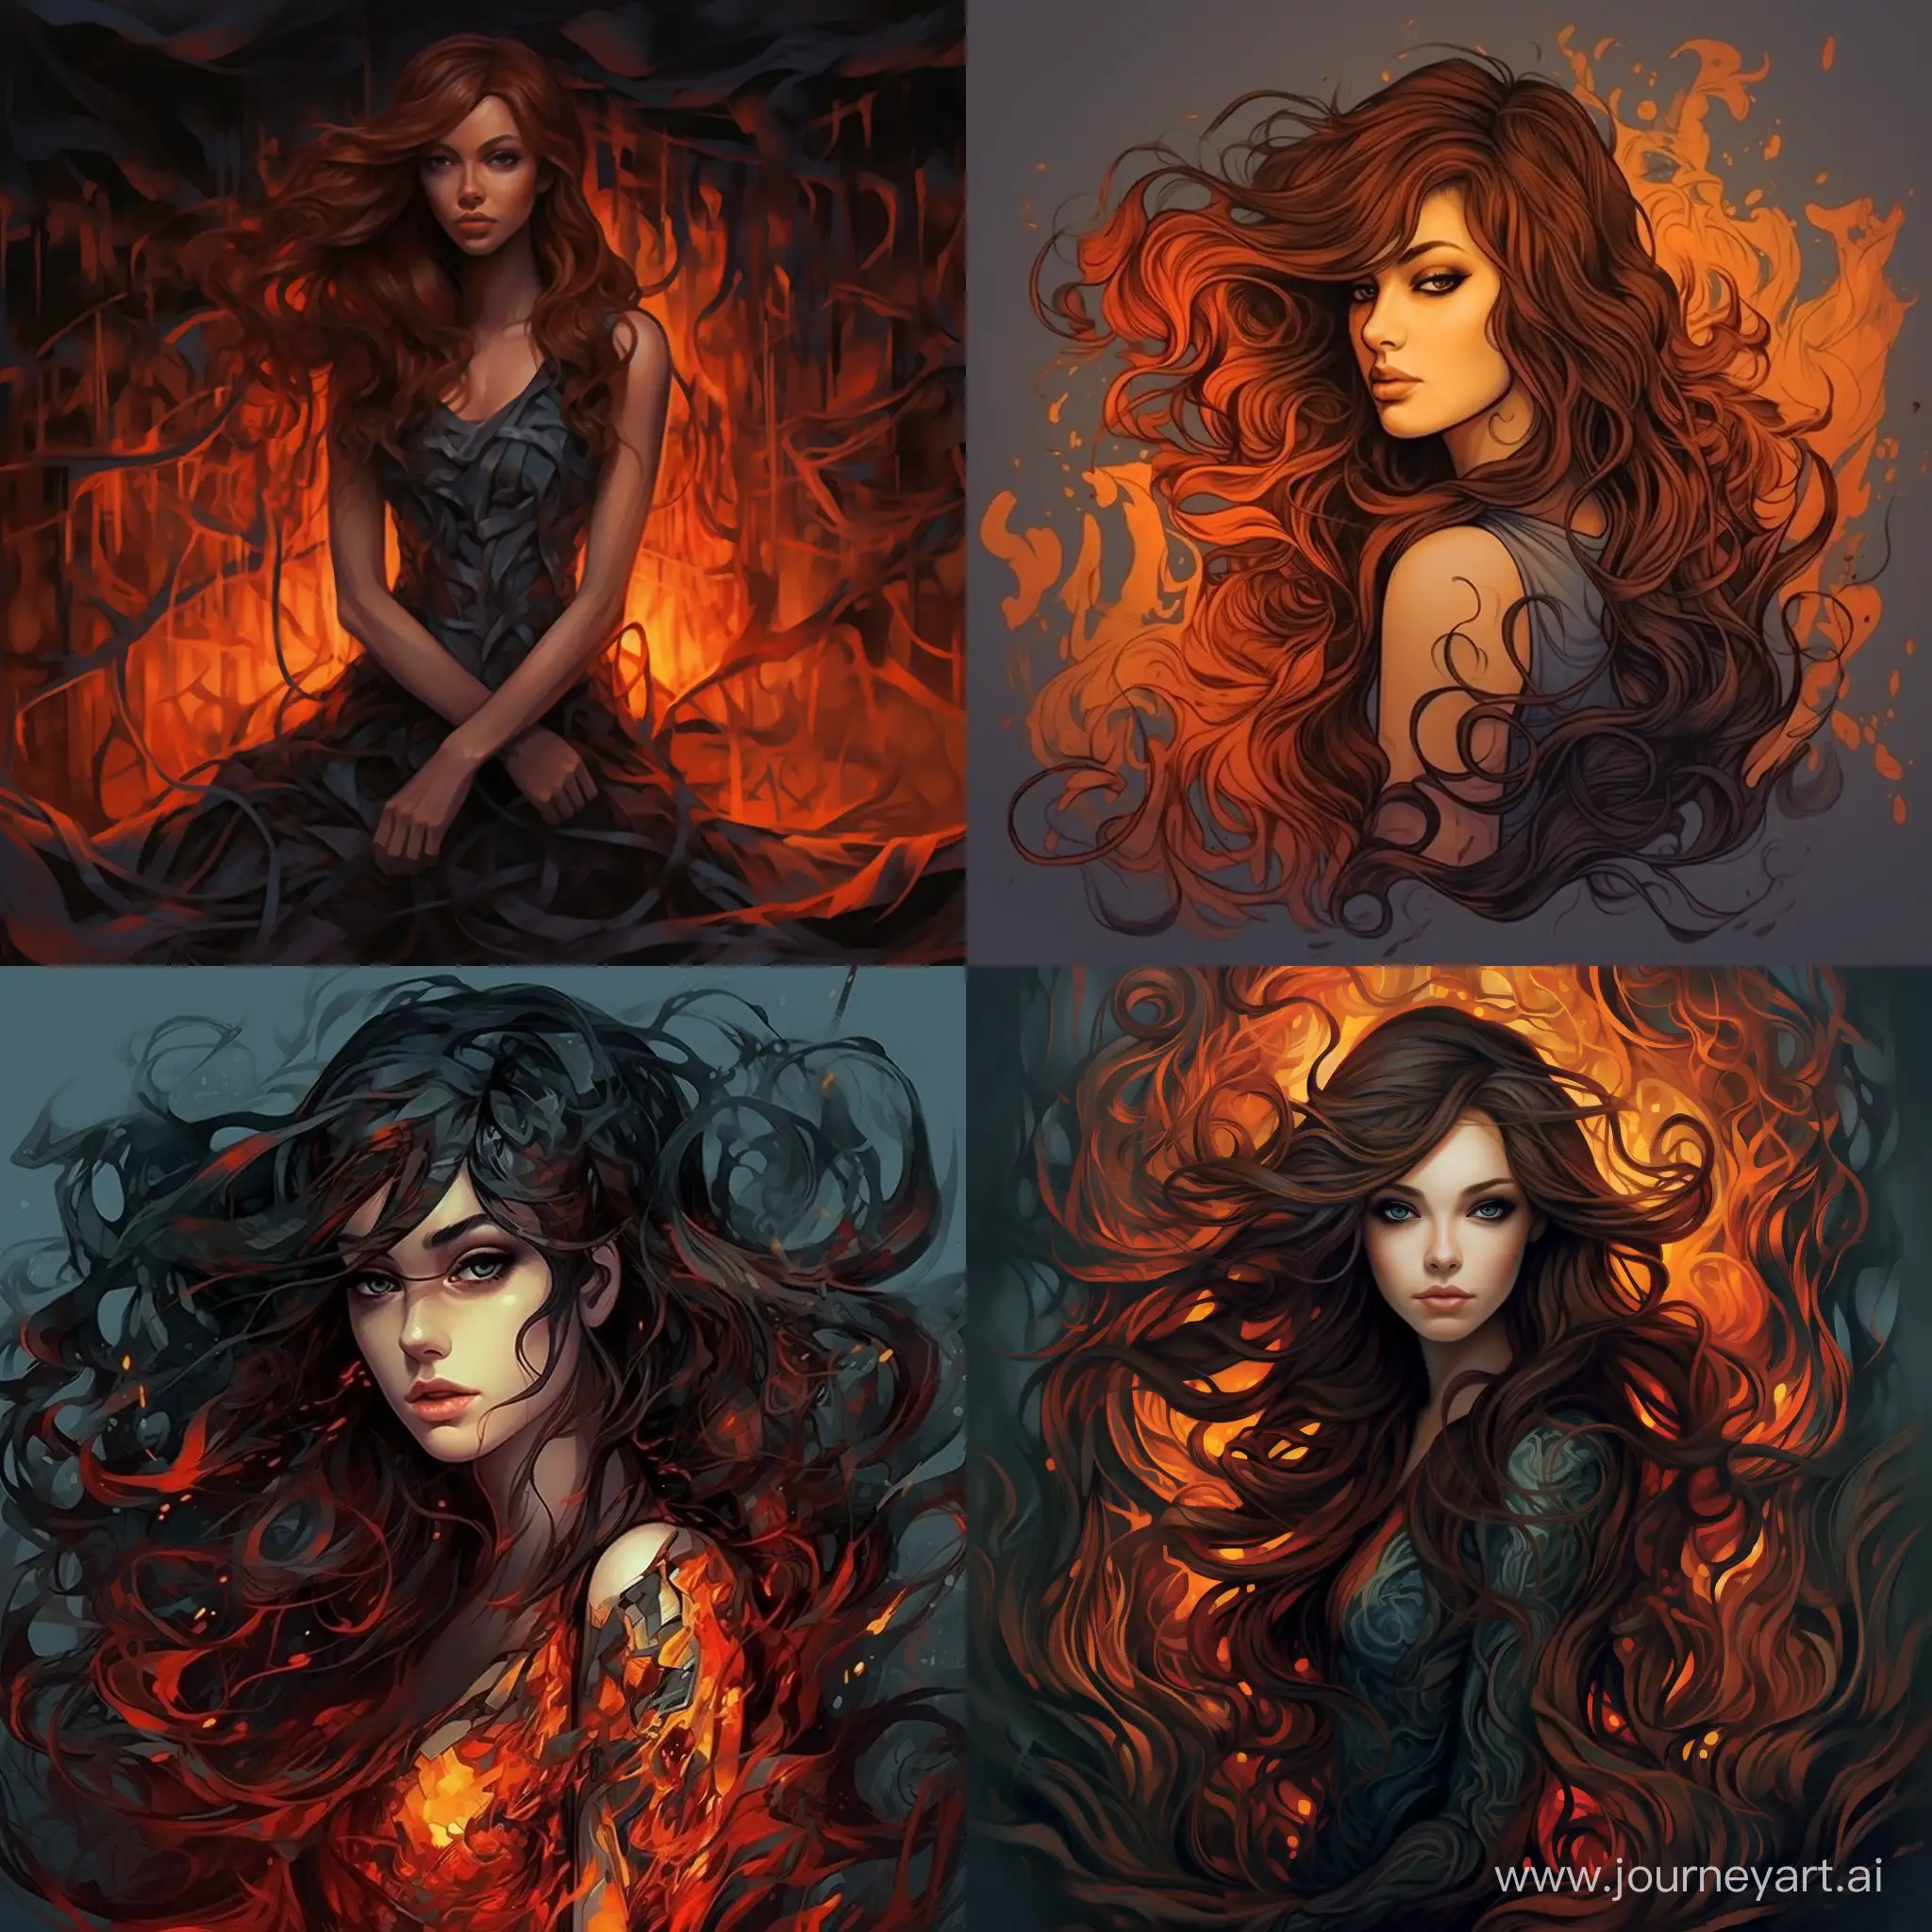 Enchanting-Woman-Embracing-Mandy-Flames-in-Captivating-11-Art